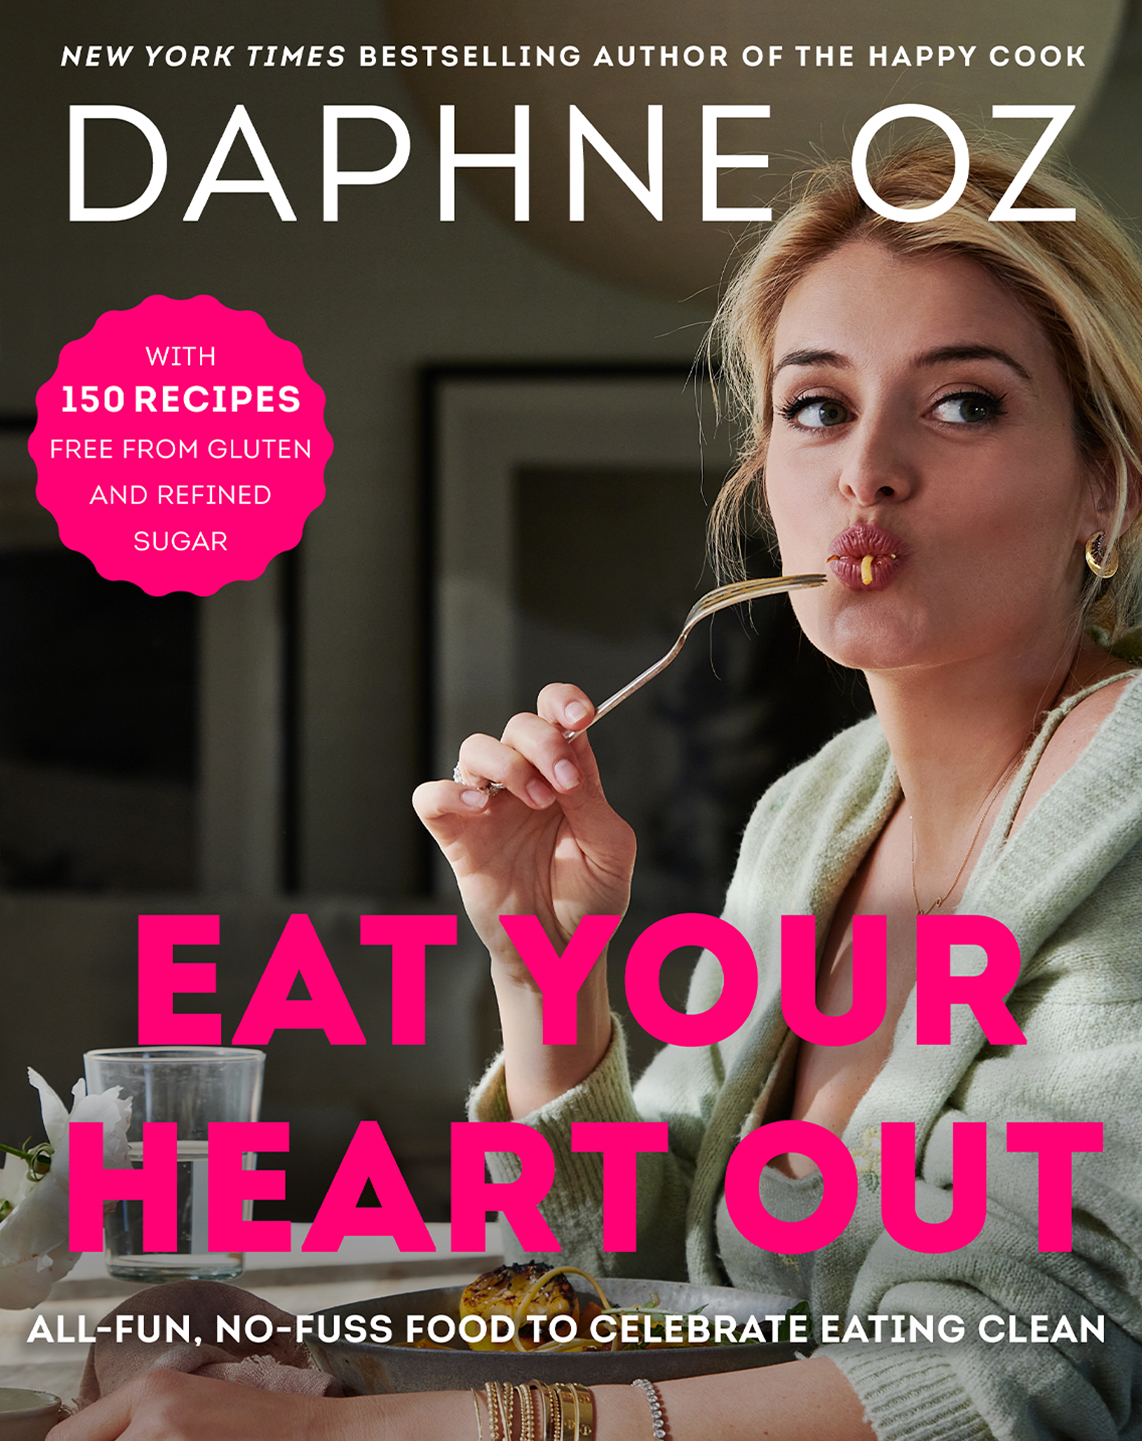 Daphne Oz Pages home